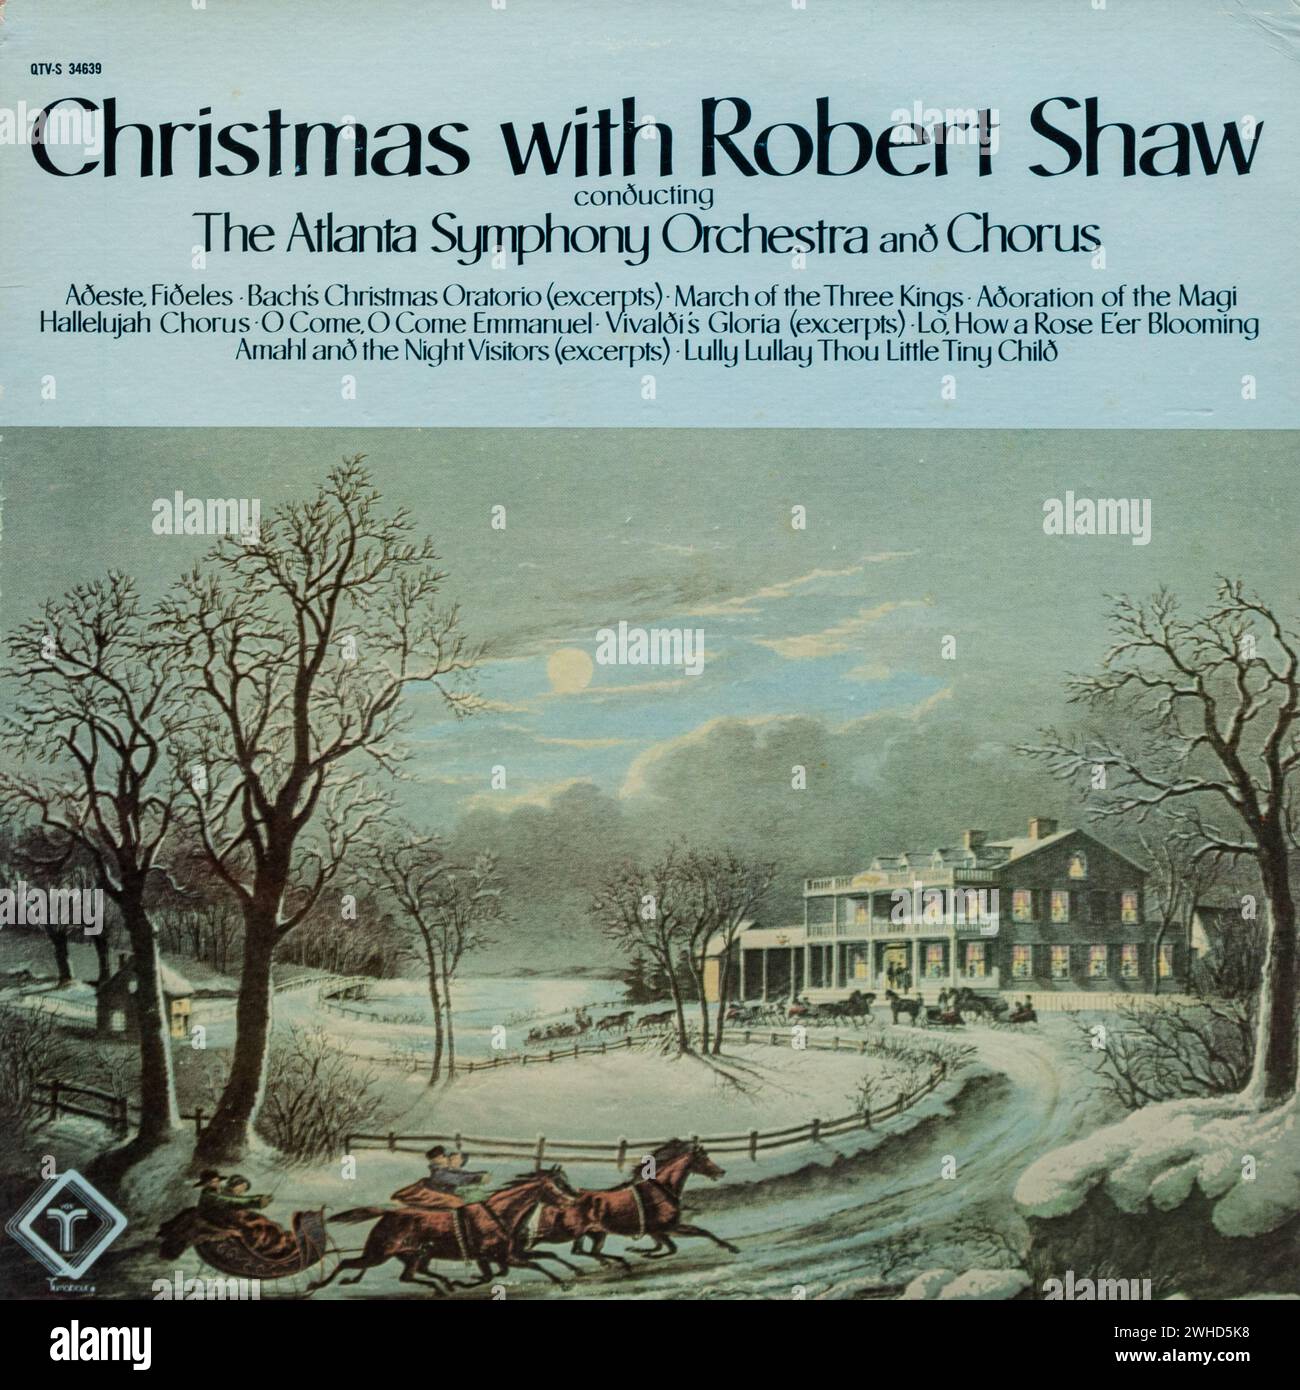 Christmas with Robert Shaw conducting The Atlanta Symphony Orchestra and Chorus, vinyl LP record album cover Stock Photo